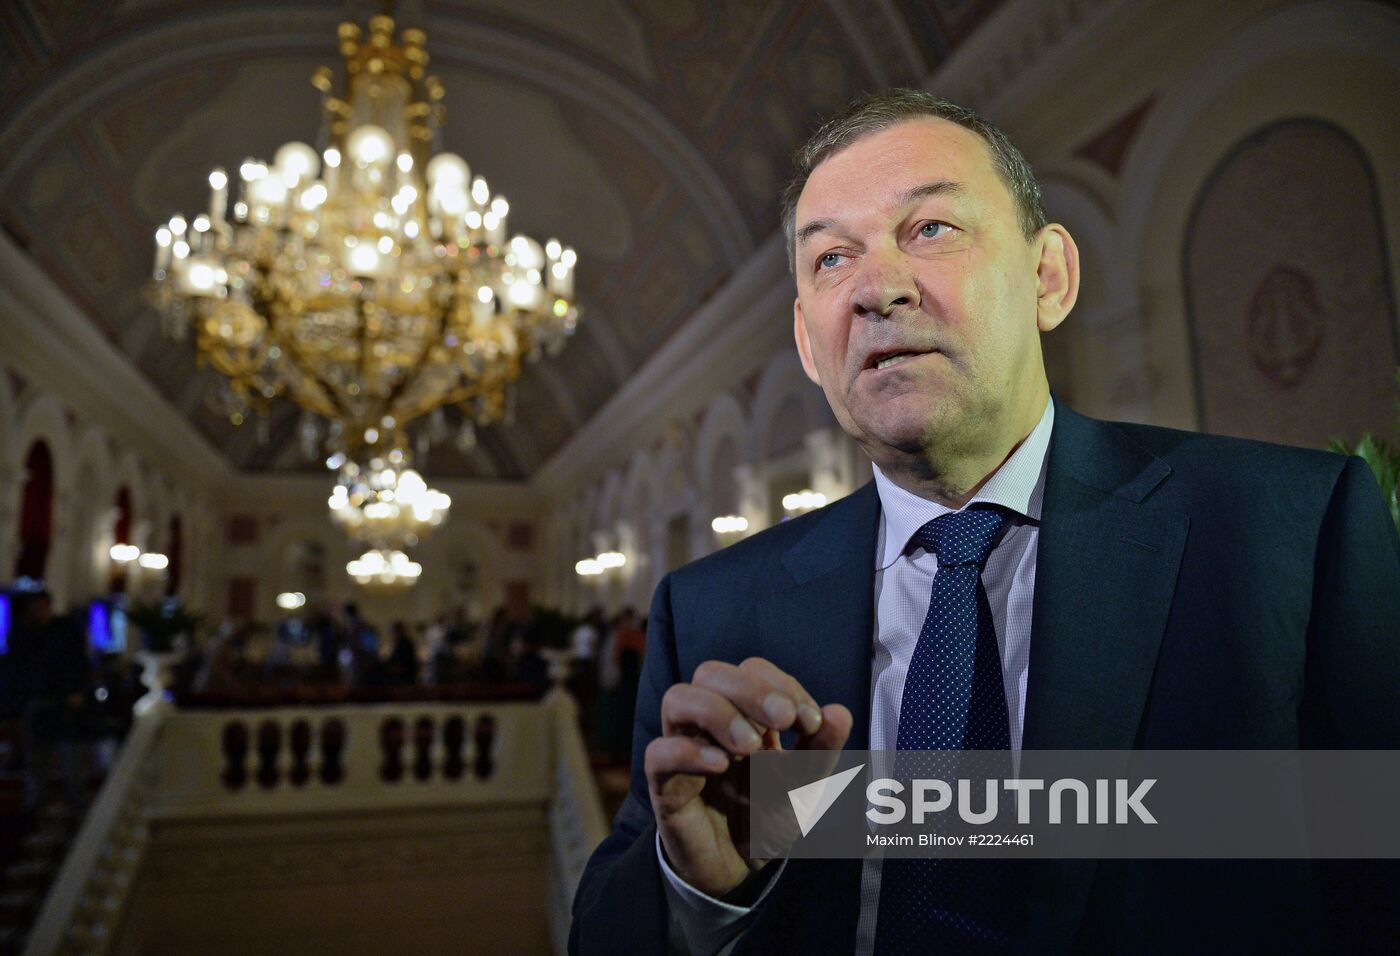 Urin succeeds Iksanov as Bolshoi Theater CEO